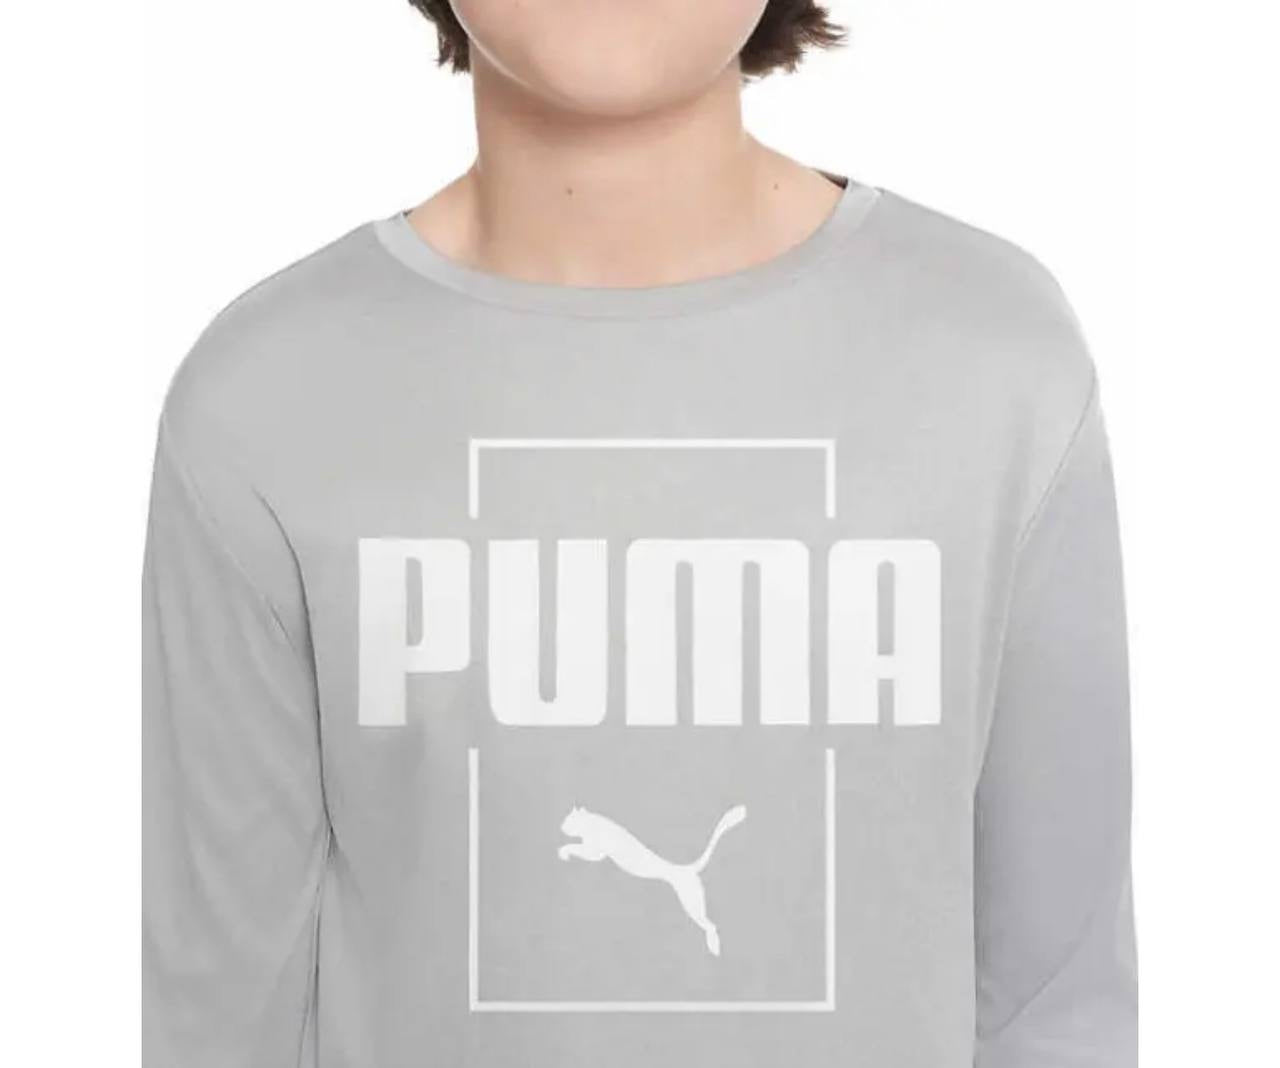 Puma hoodie for kids